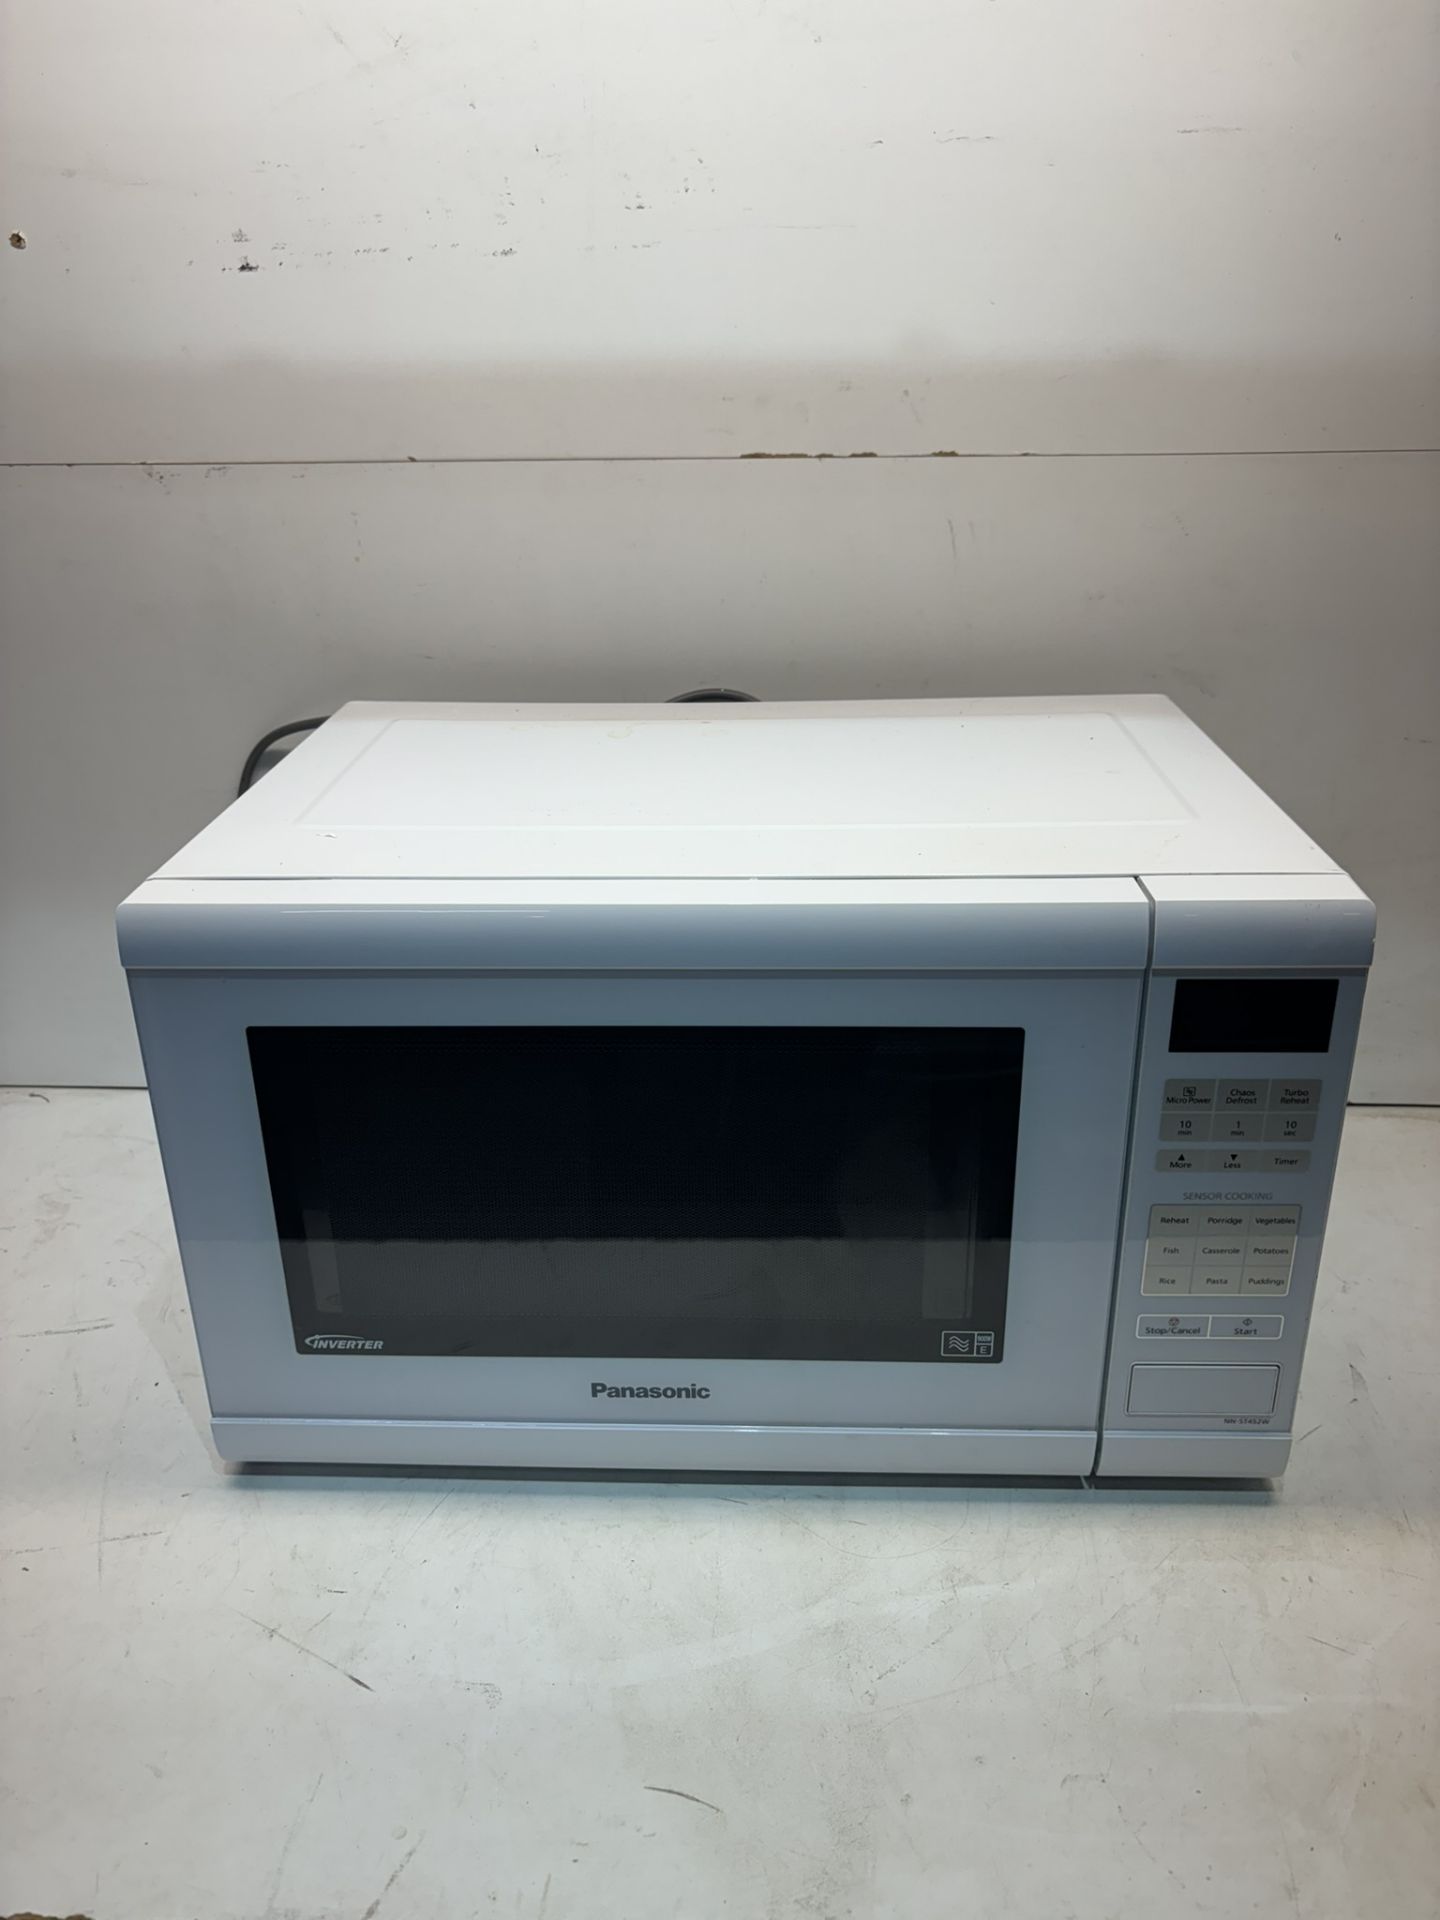 Panasonic NN-ST452W 900W Microwave Oven